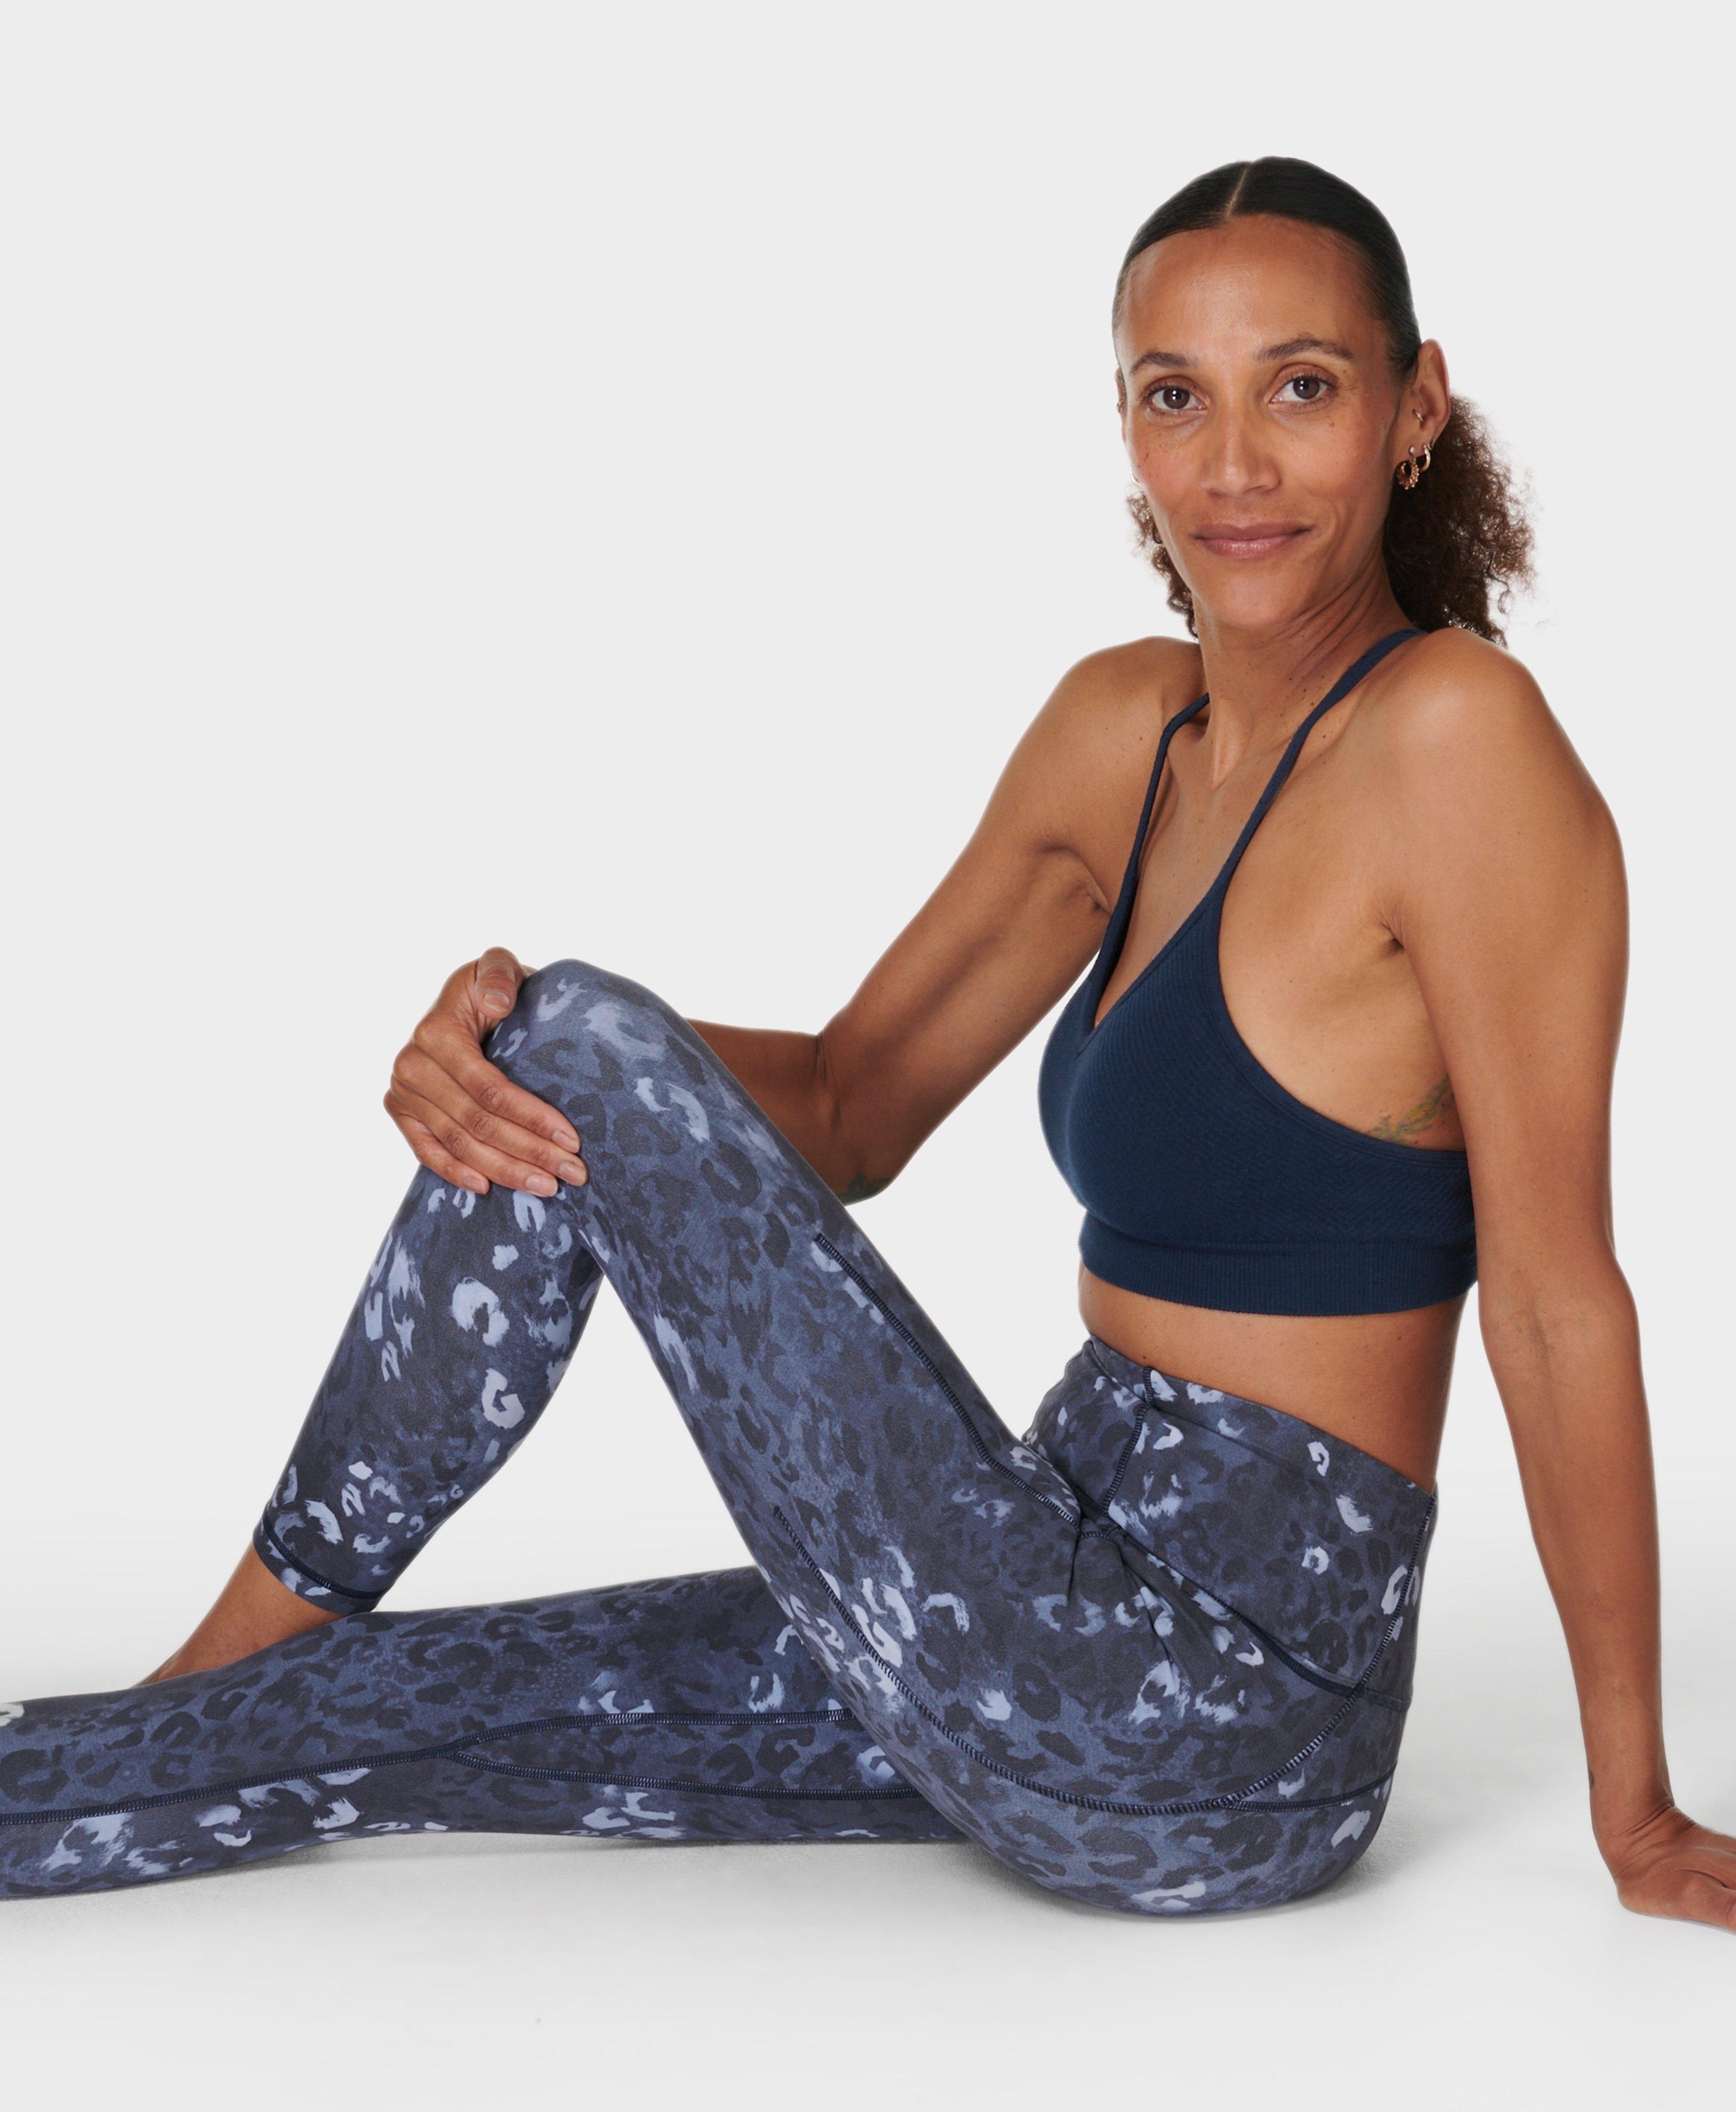 Super Soft 7/8 Yoga Leggings - Blue Leopard Shadow Print, Women's Leggings